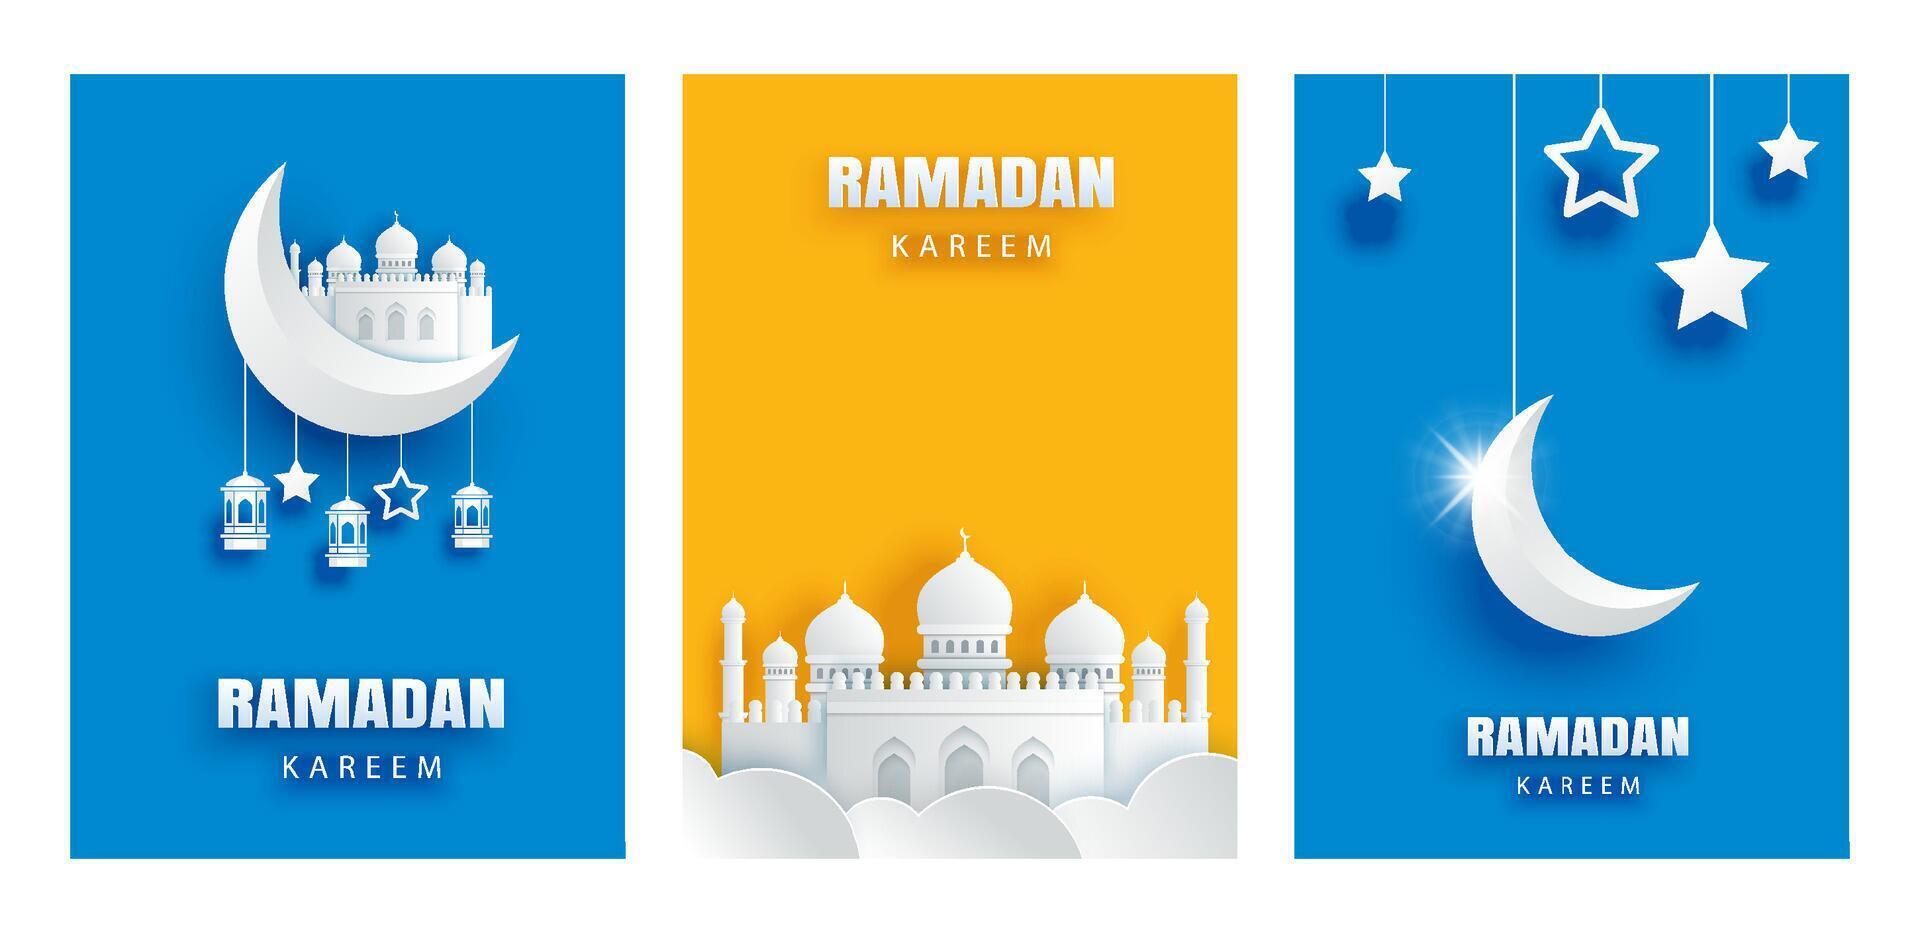 Ramadan kareem Gruß Karte Hintergrund. eid Mubarak Papier Kunst Banner Illustration Design. vektor